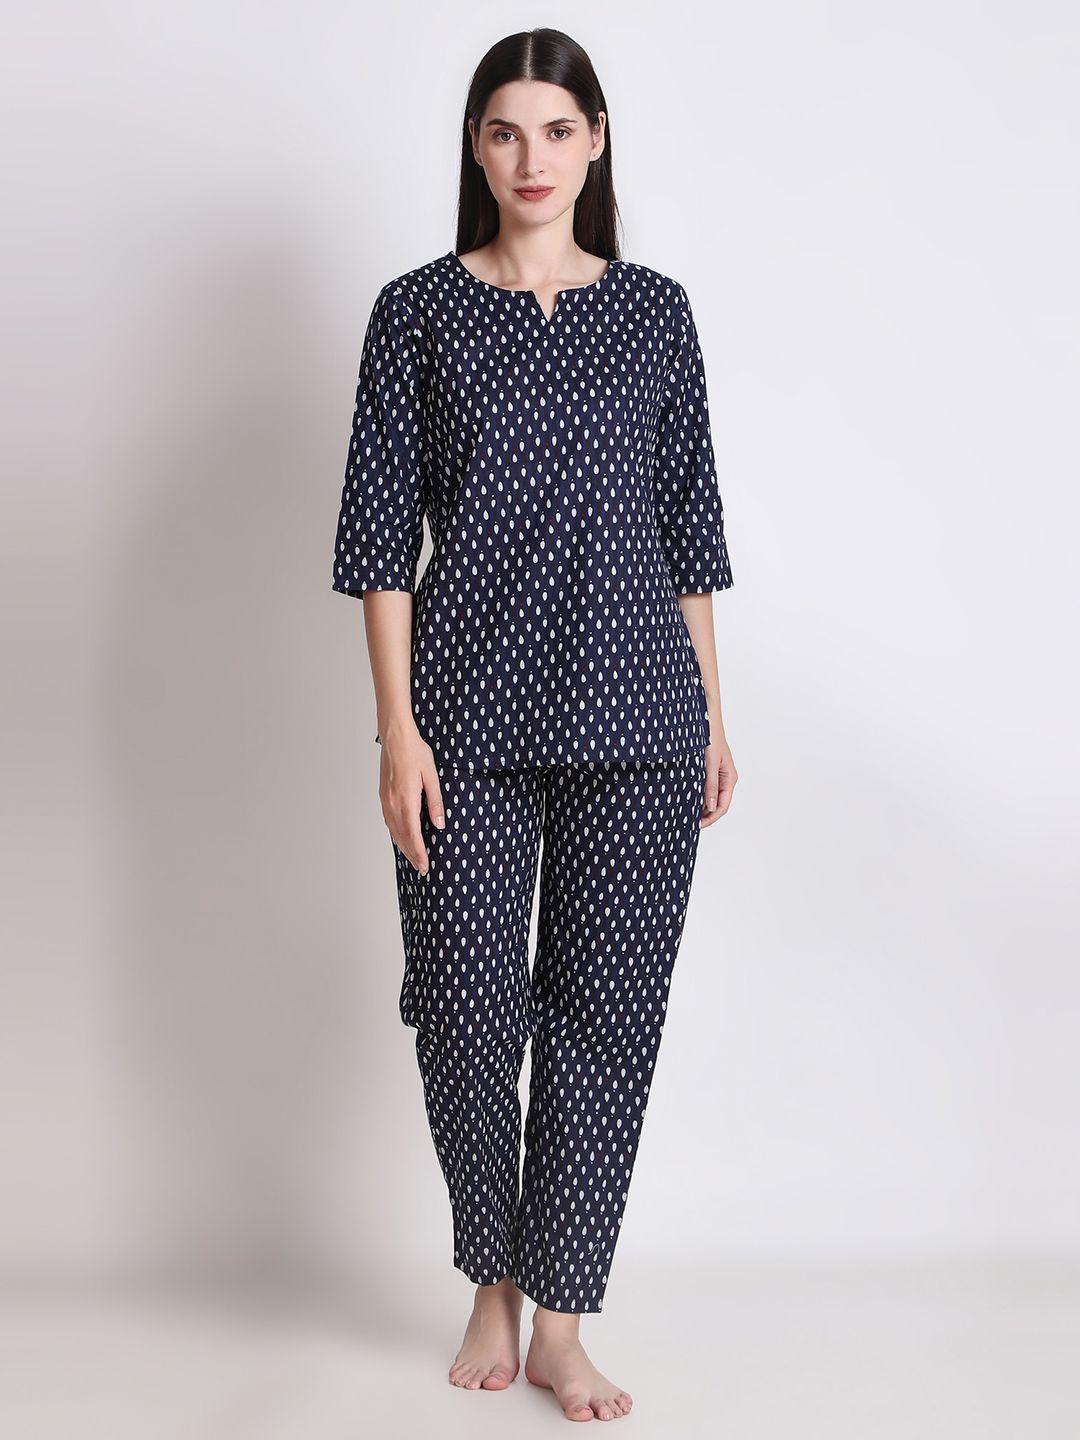 ichaa geometric printed notched neck top with pyjamas